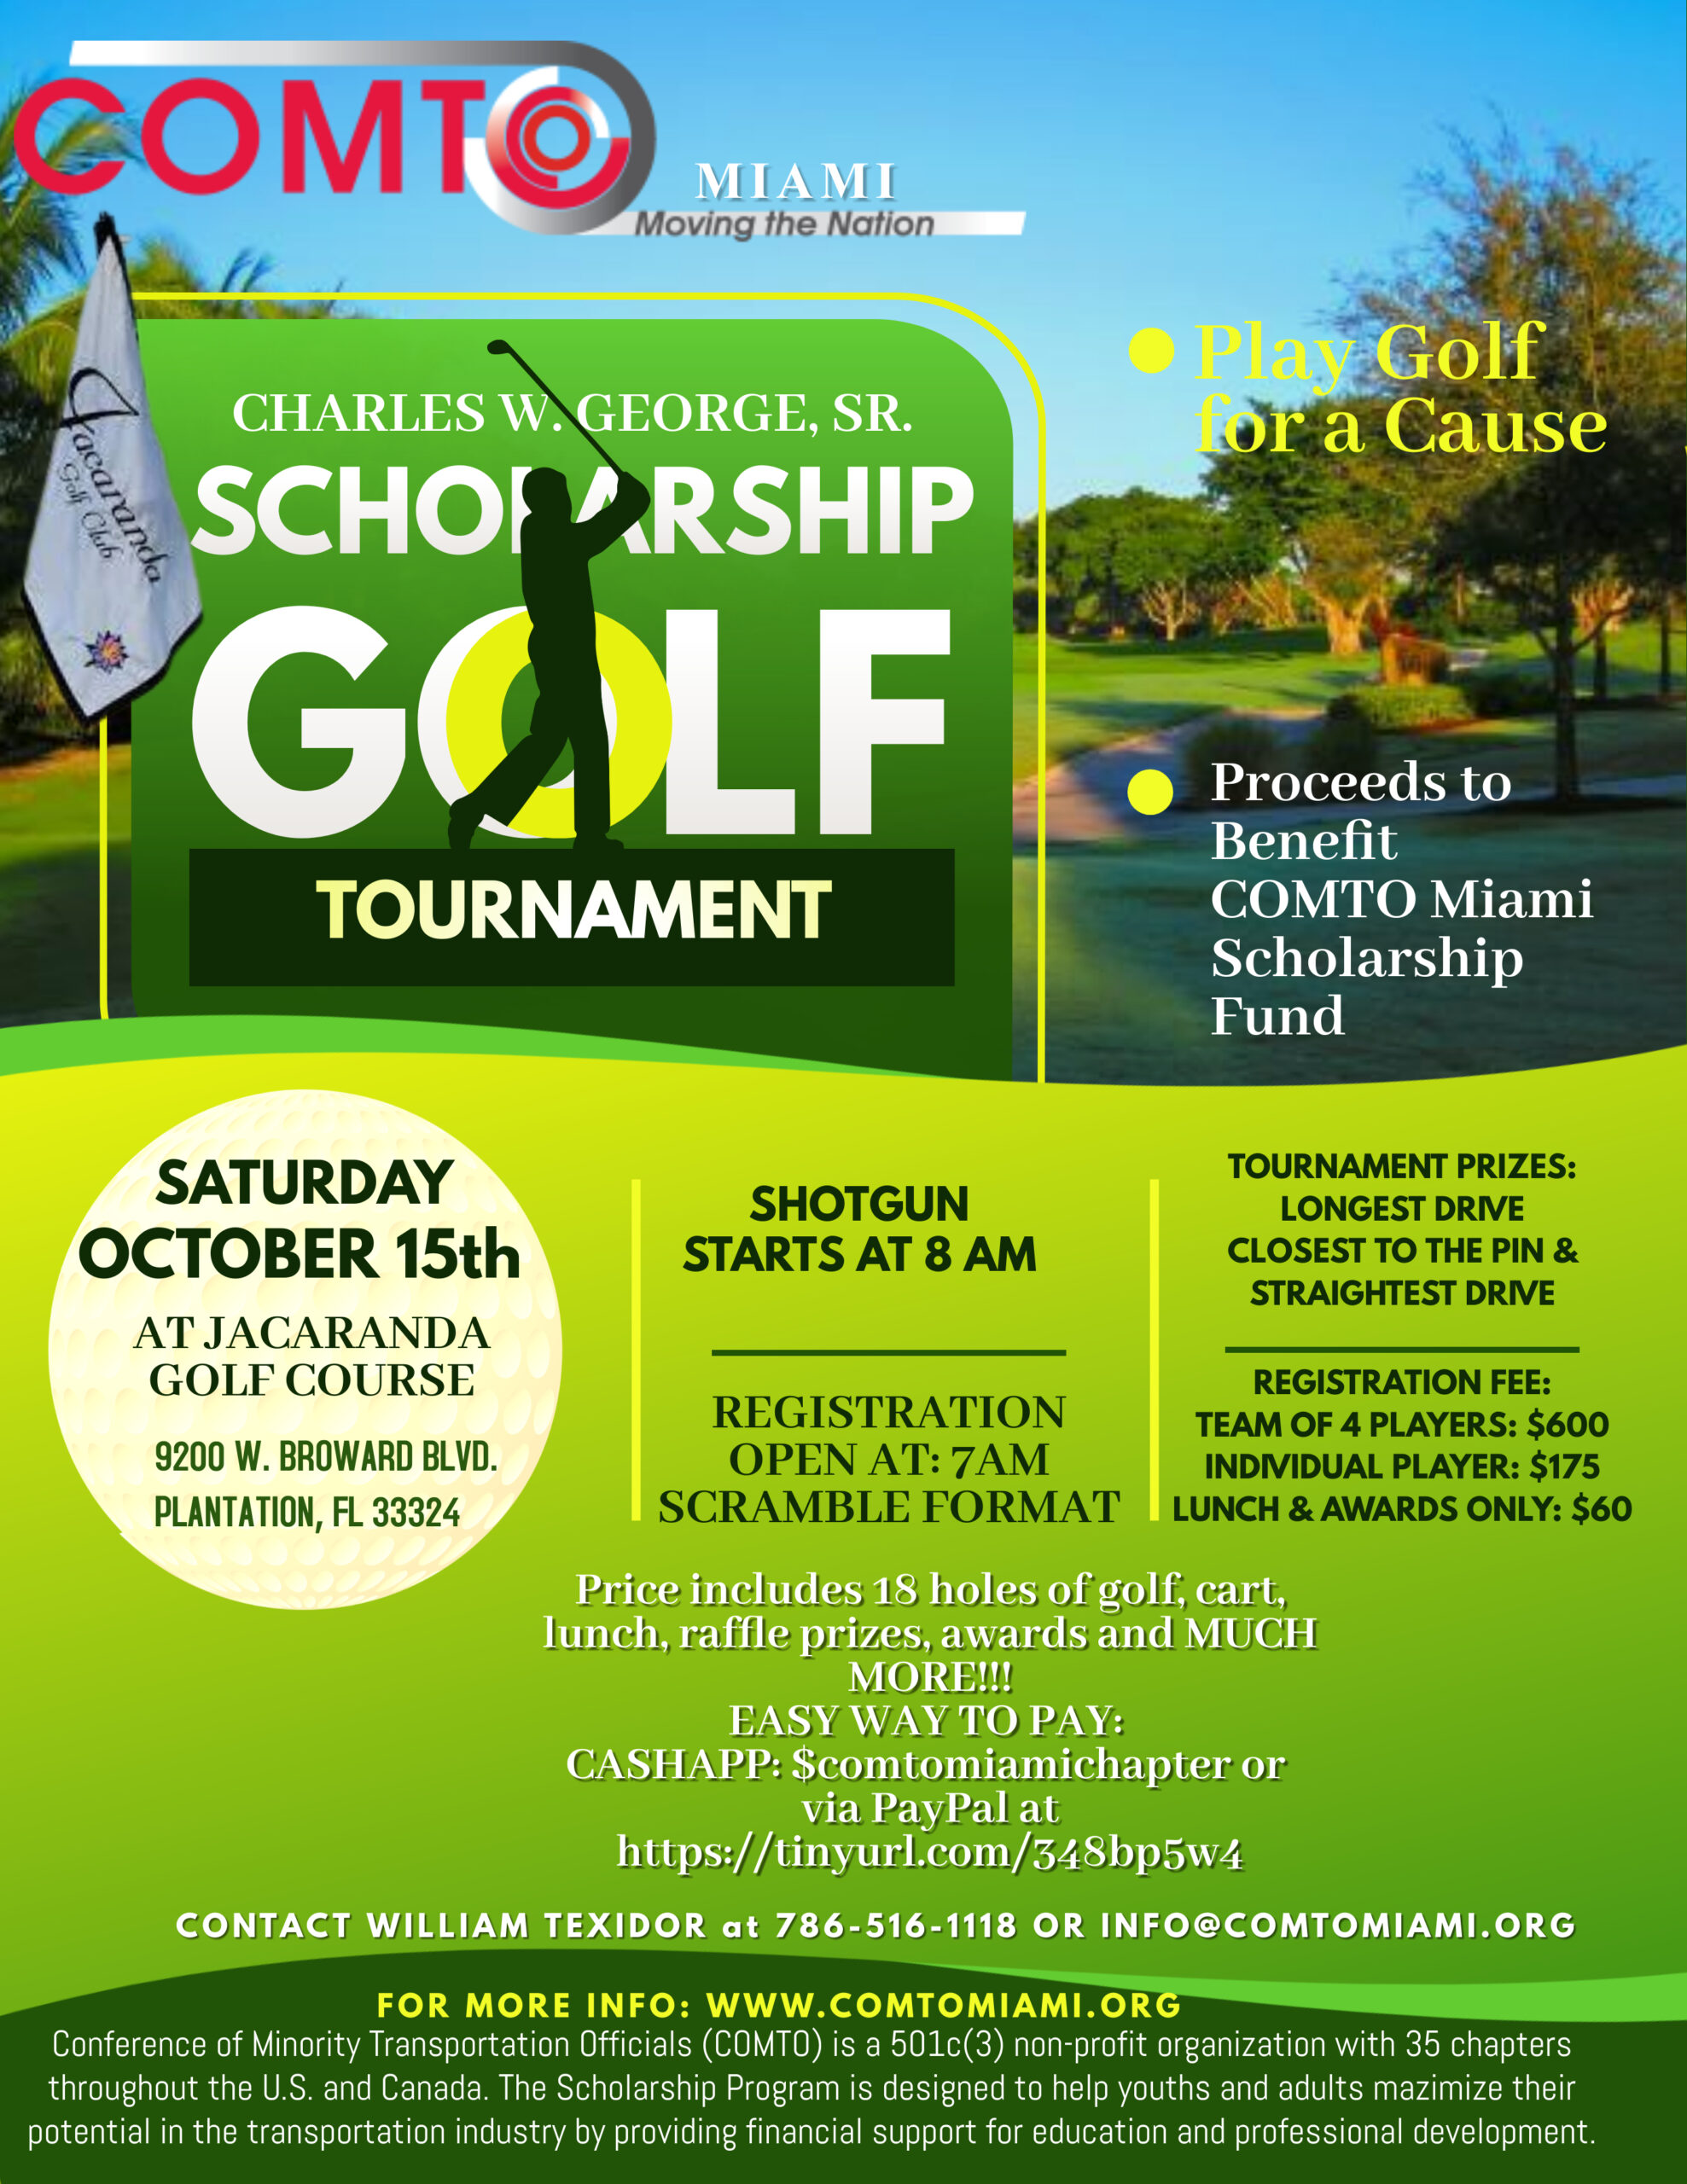 COMTO Miami Scholarship Golf Tournament